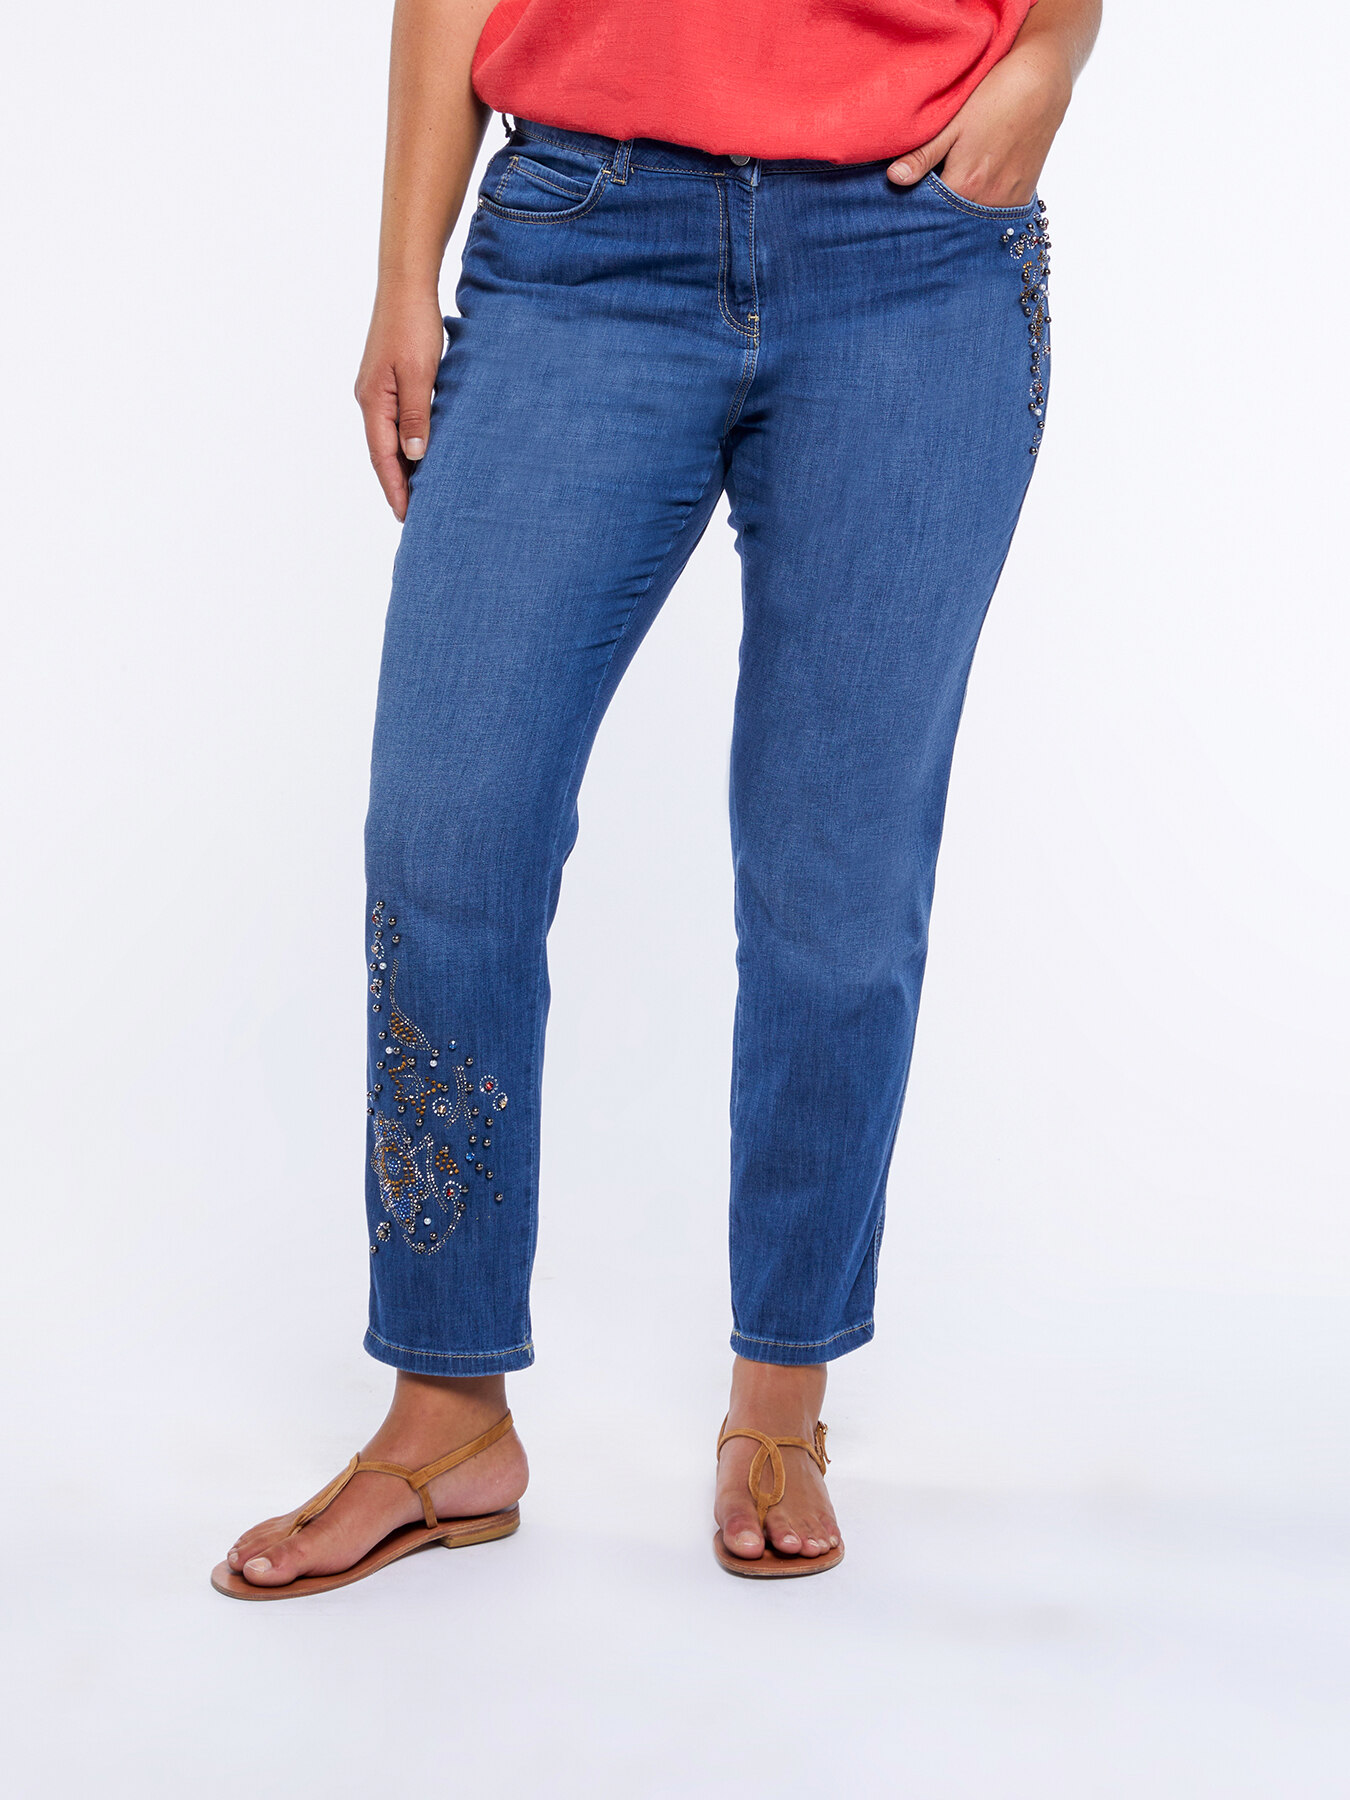 Jeans Slim Girlfit modello Zaffiro con ricami image number 0